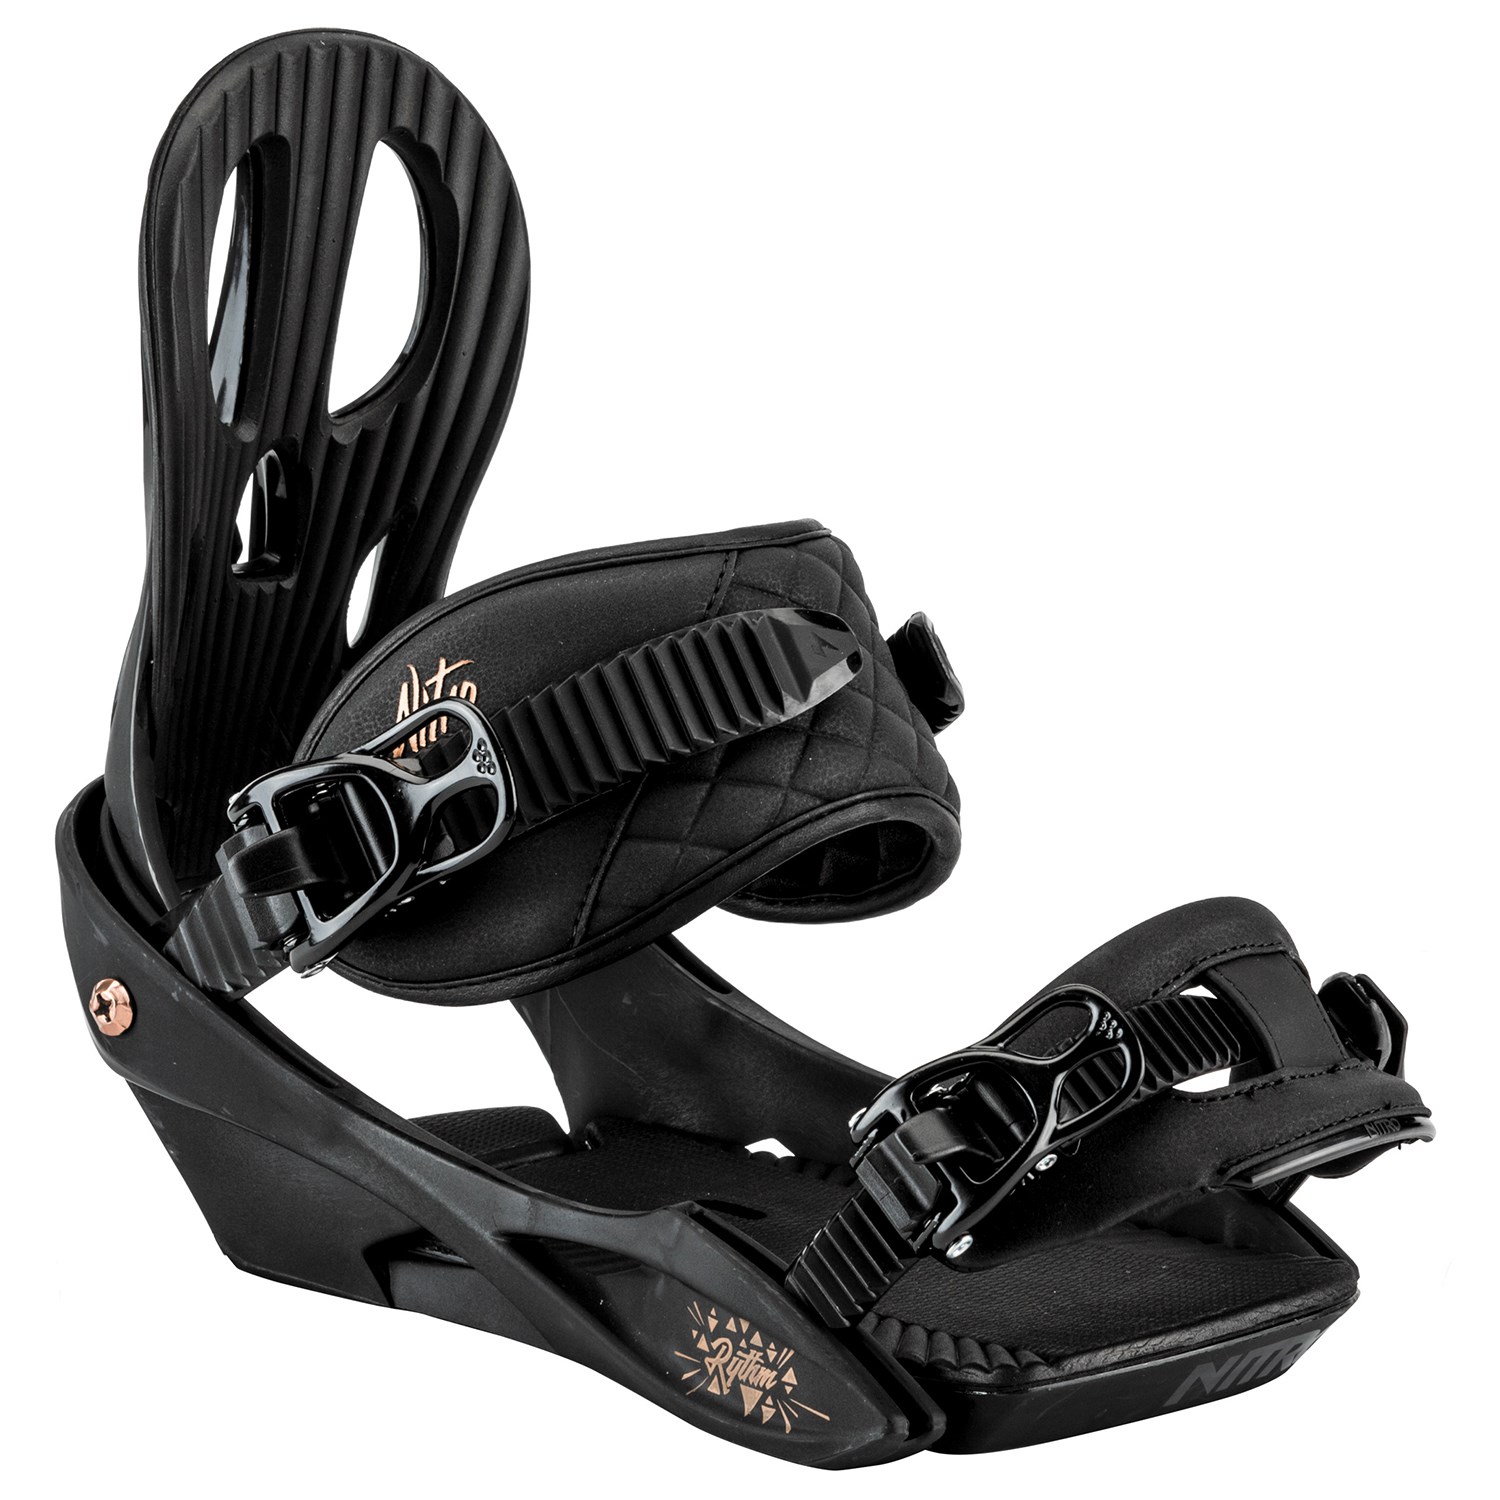 Black Nitro Raiden Snowboard Bindings Ankle Slider Straps x 2 